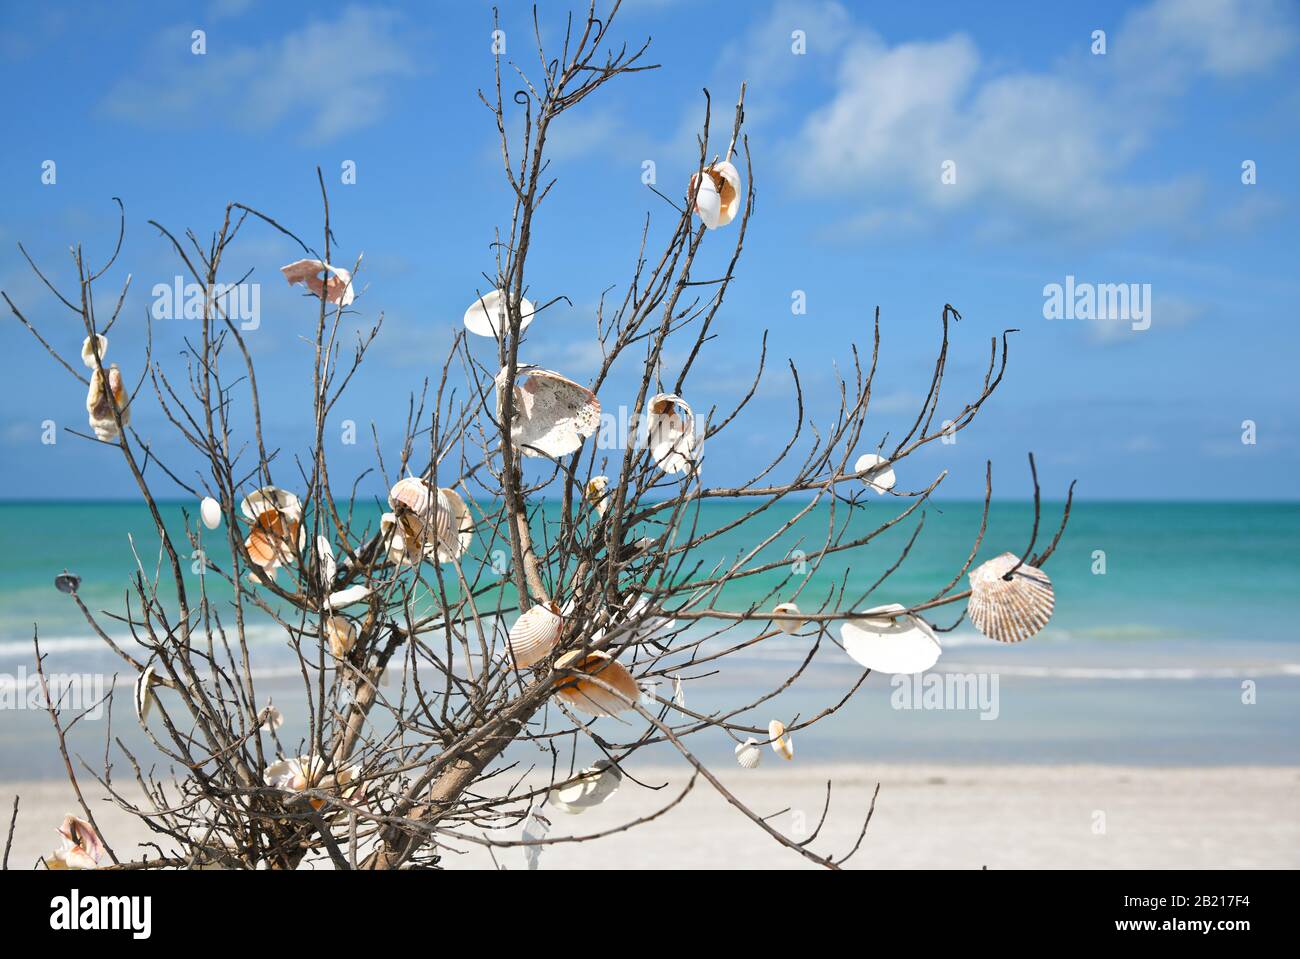 Filiale am Anna Maria Island Beach, an dem Menschen Muscheln gelegt haben  Stockfotografie - Alamy